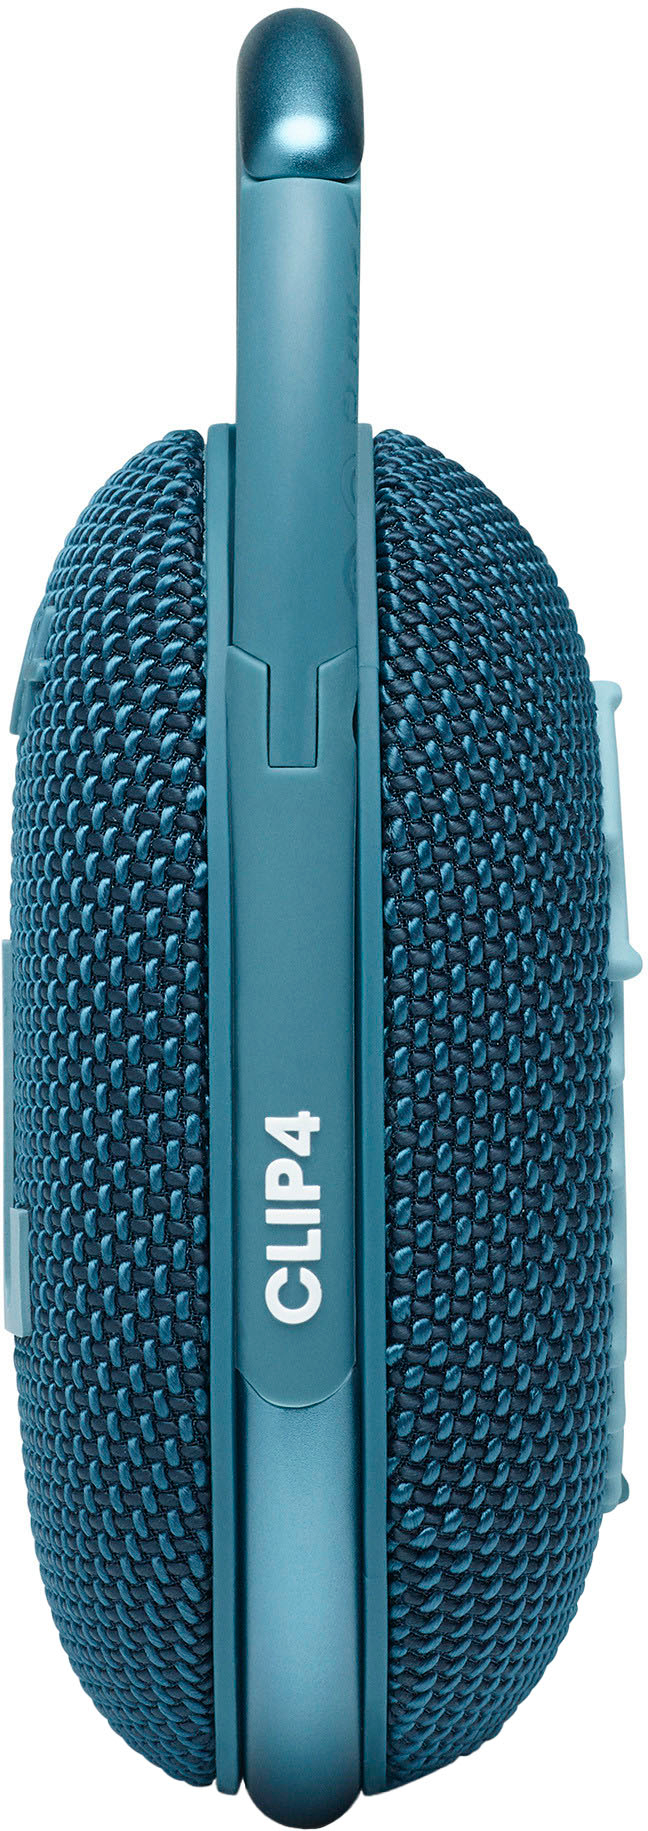 Buy JBL Clip 4 Portable Bluetooth Waterproof Speaker, Blue Online